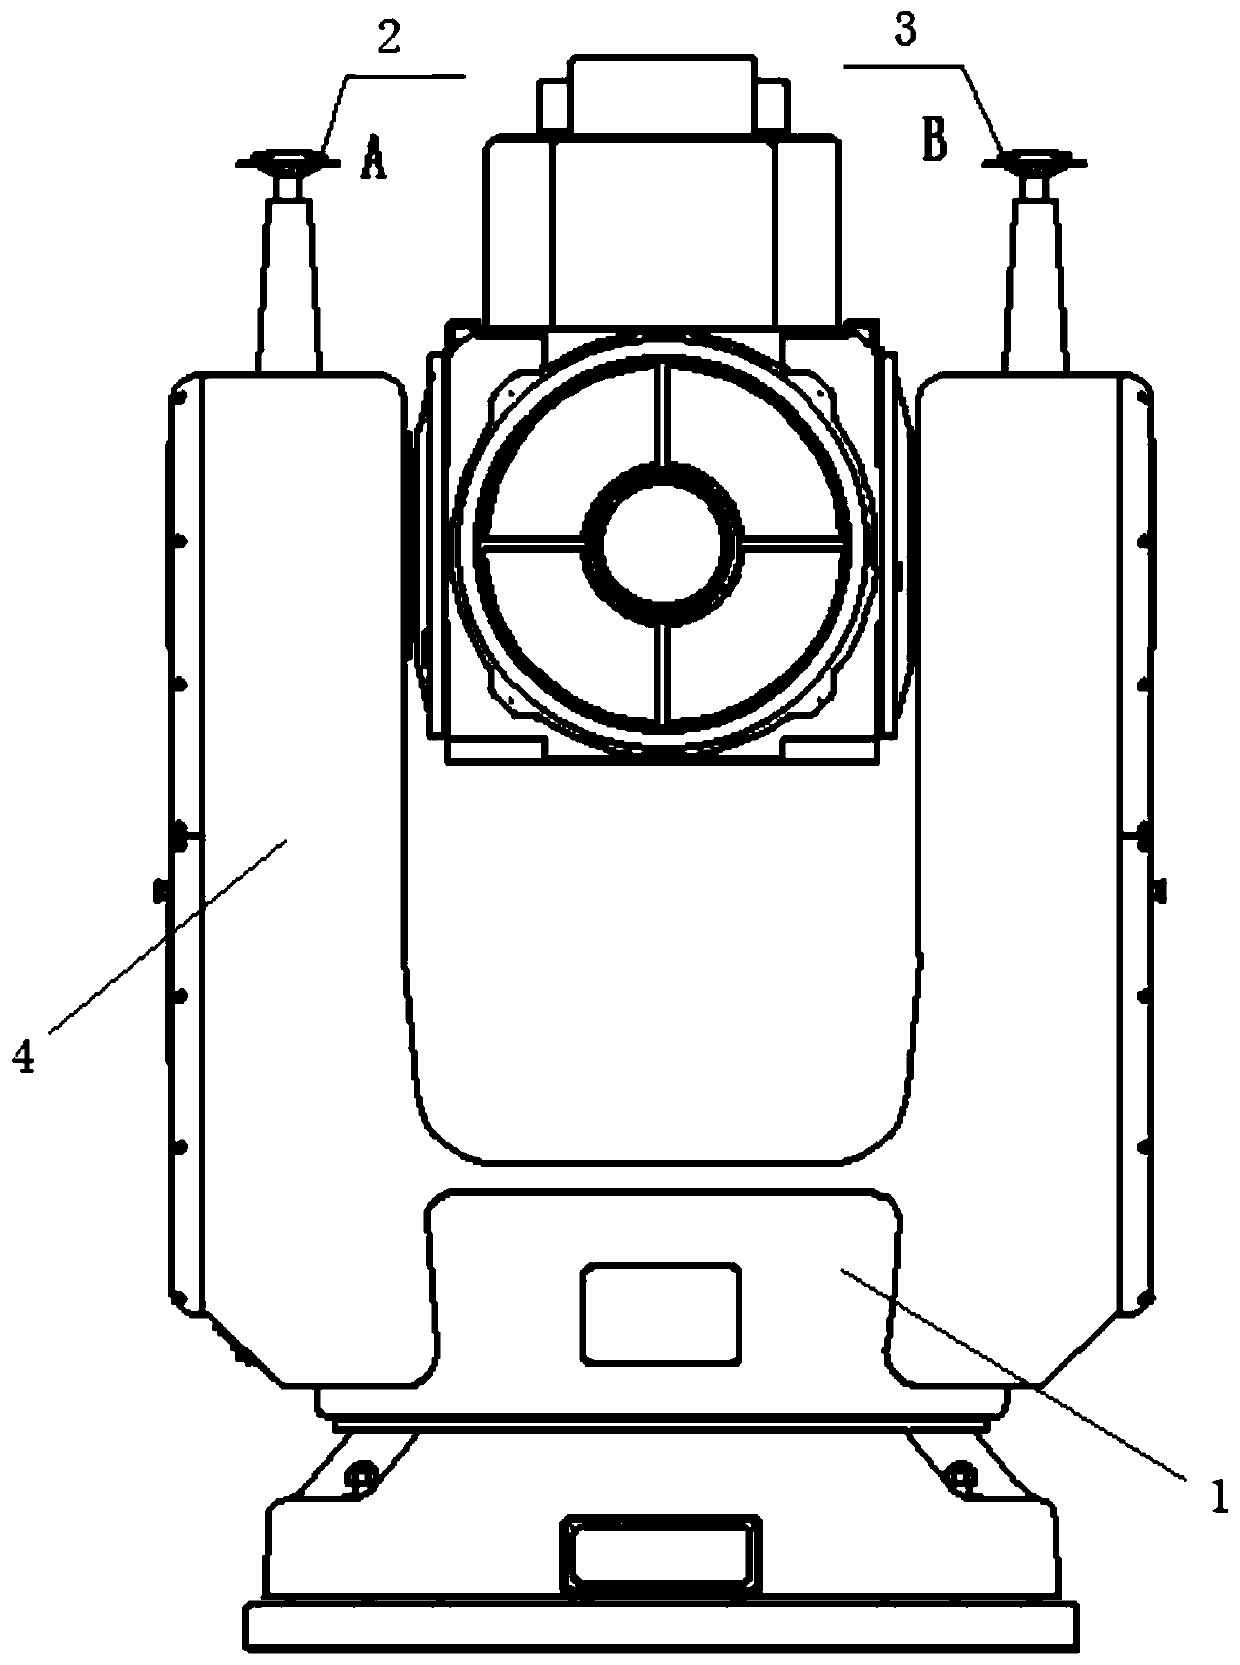 Self-positioning orientation system and method based on vehicle-mounted theodolite